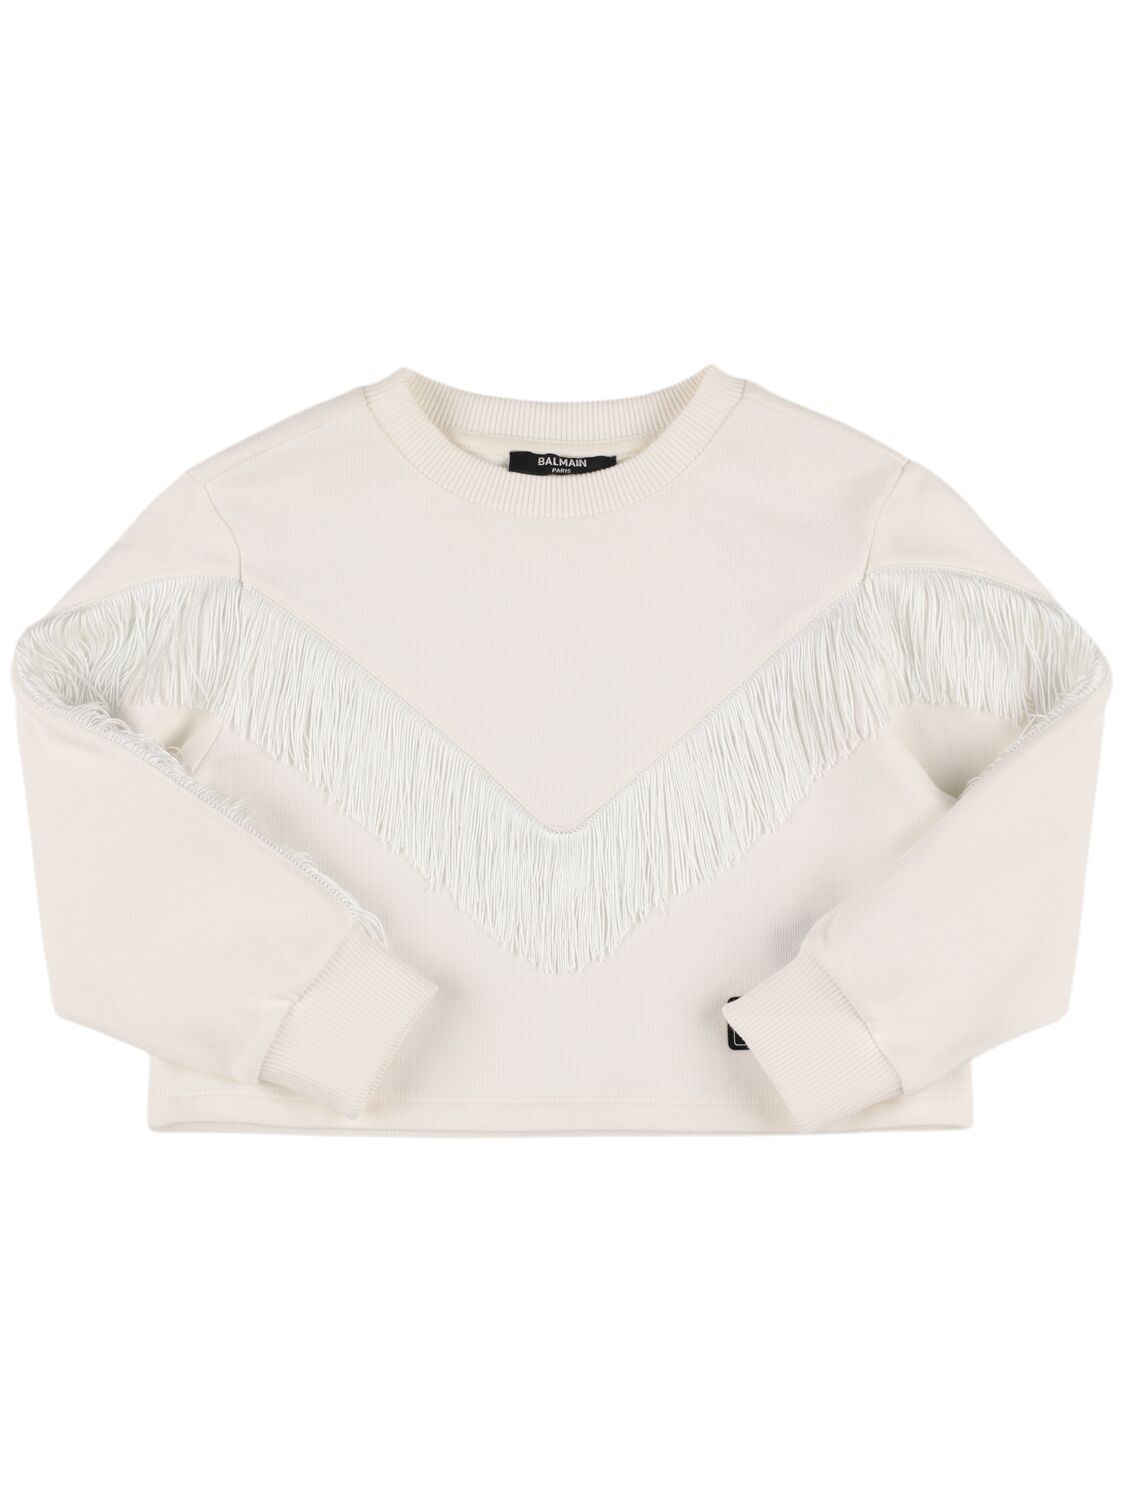 Balmain Cropped Cotton Sweatshirt W/ Fringe In Neutral